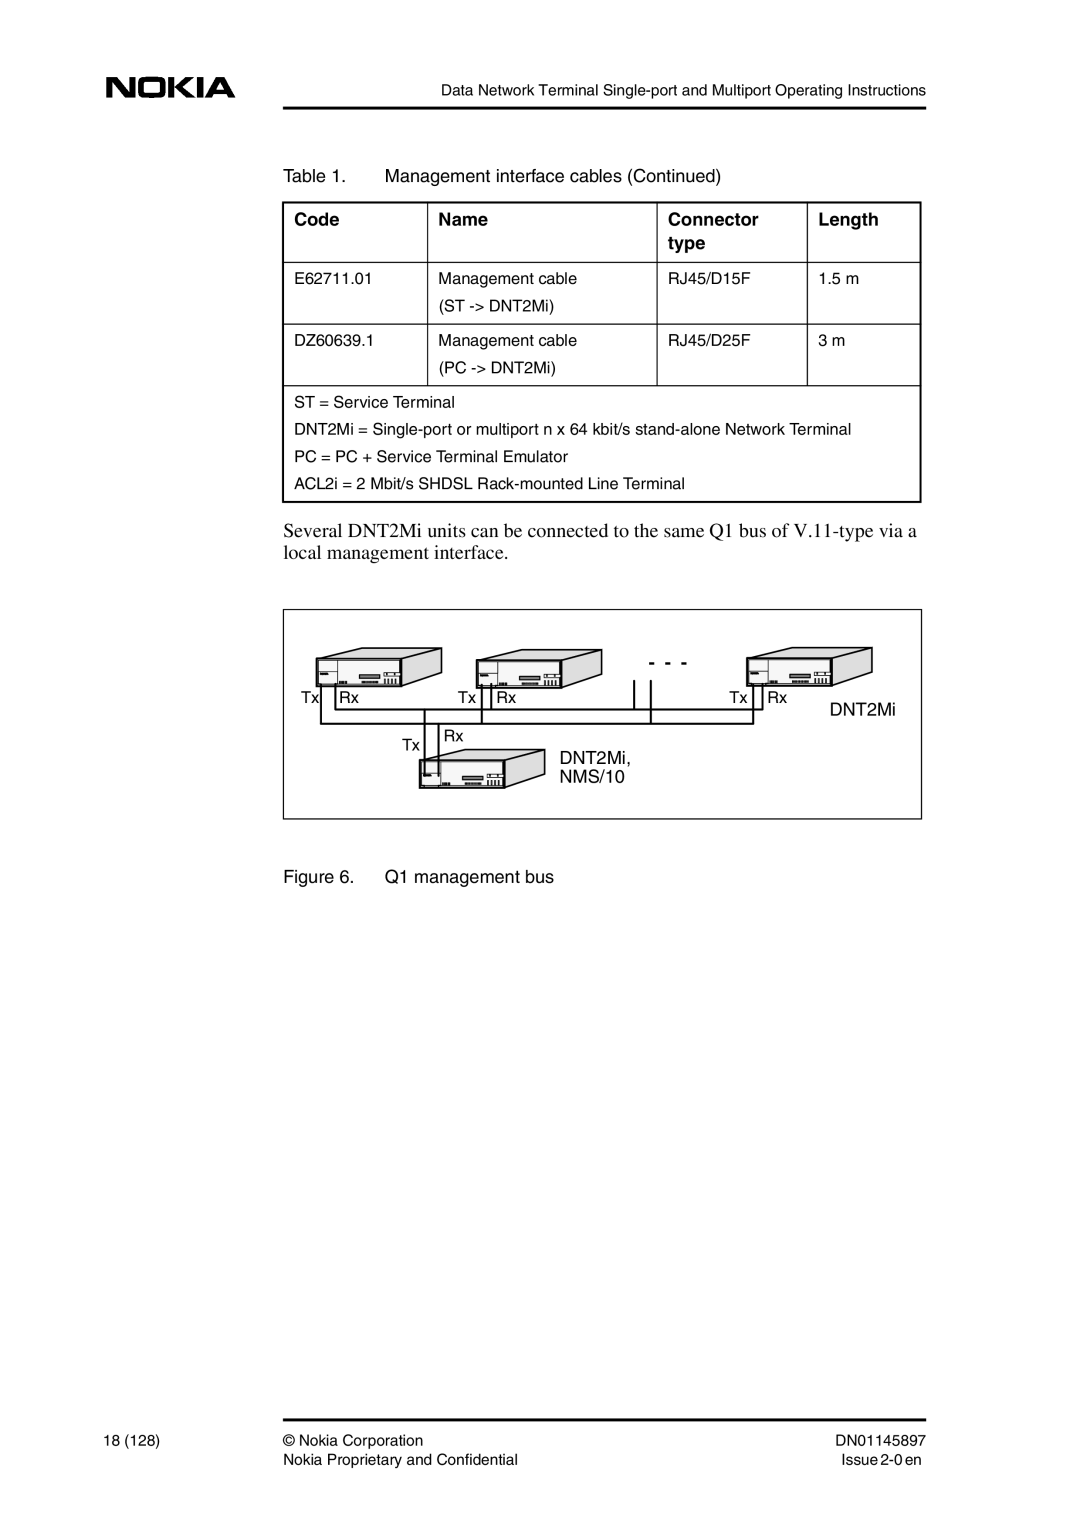 Nokia DNT2Mi sp/mp user manual Code, Name, Connector, Length, type 